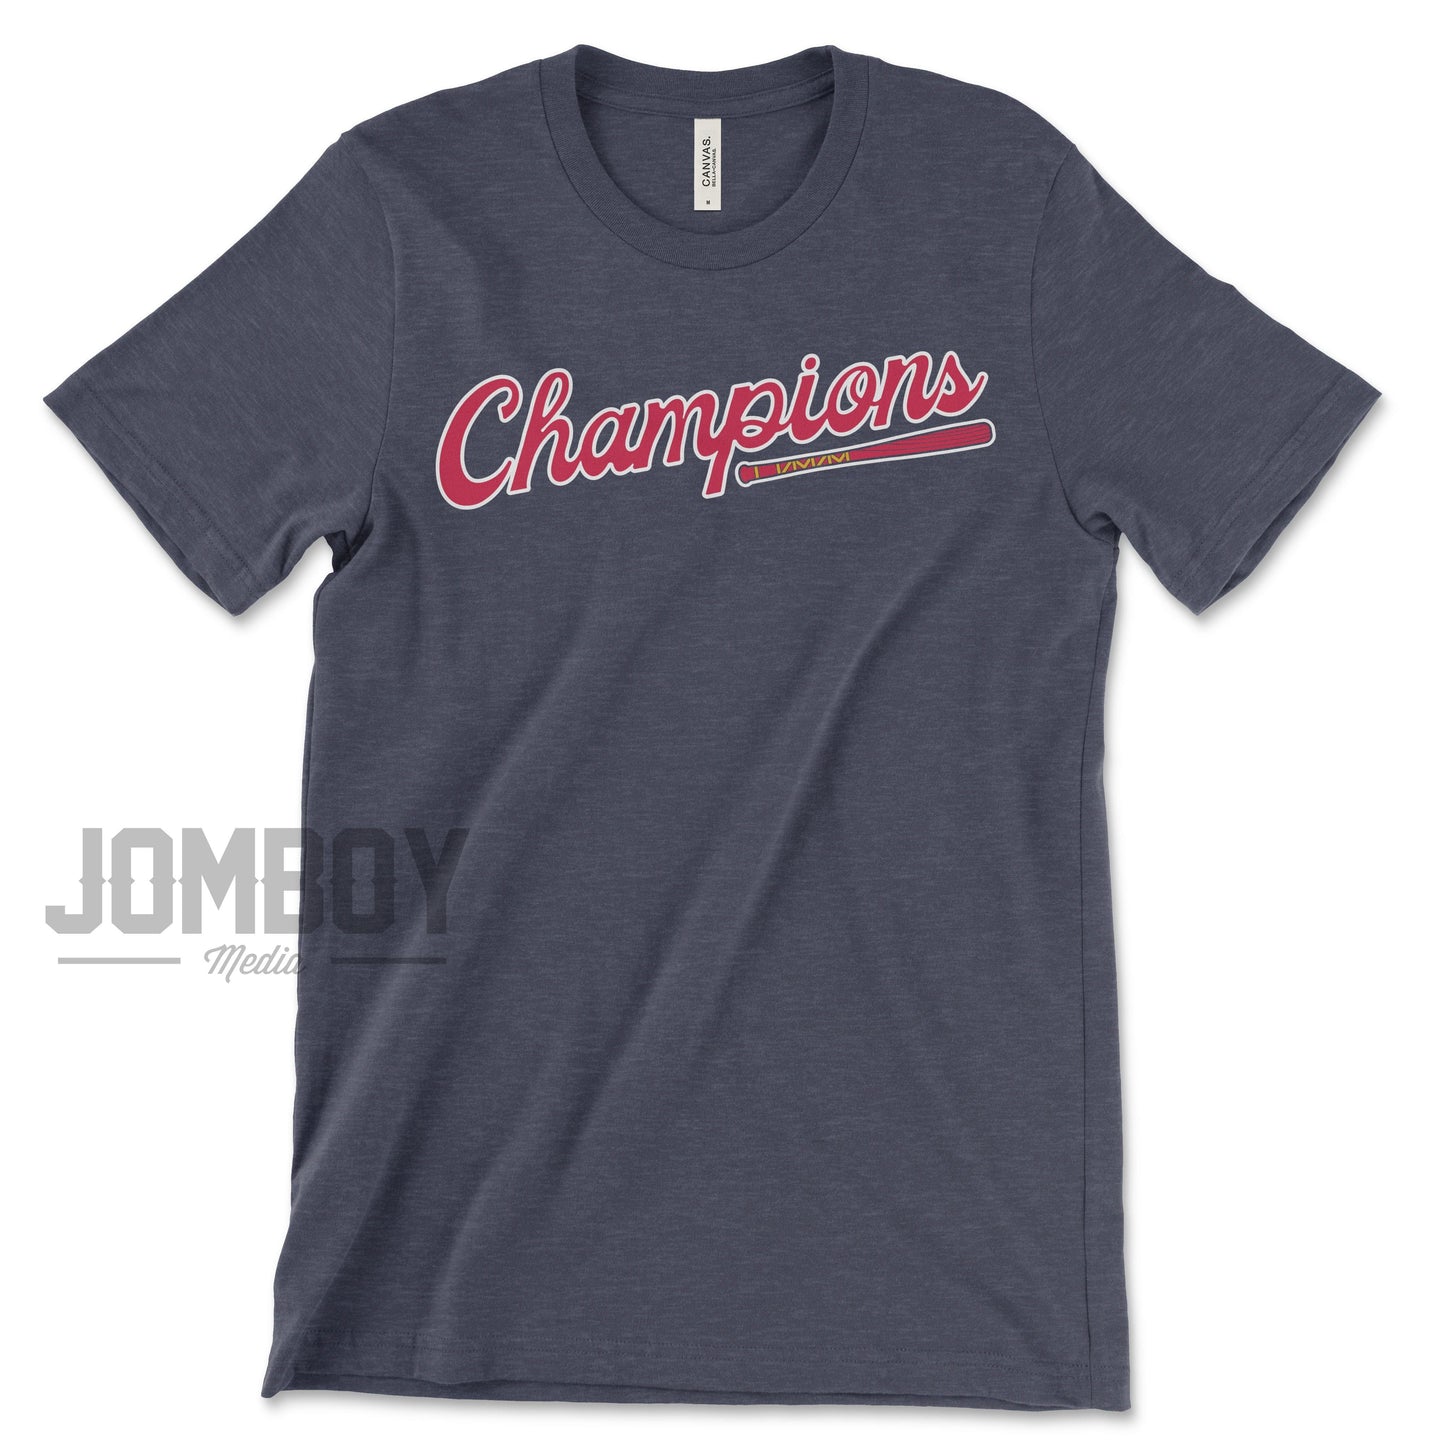 Champions | T-Shirt - Jomboy Media